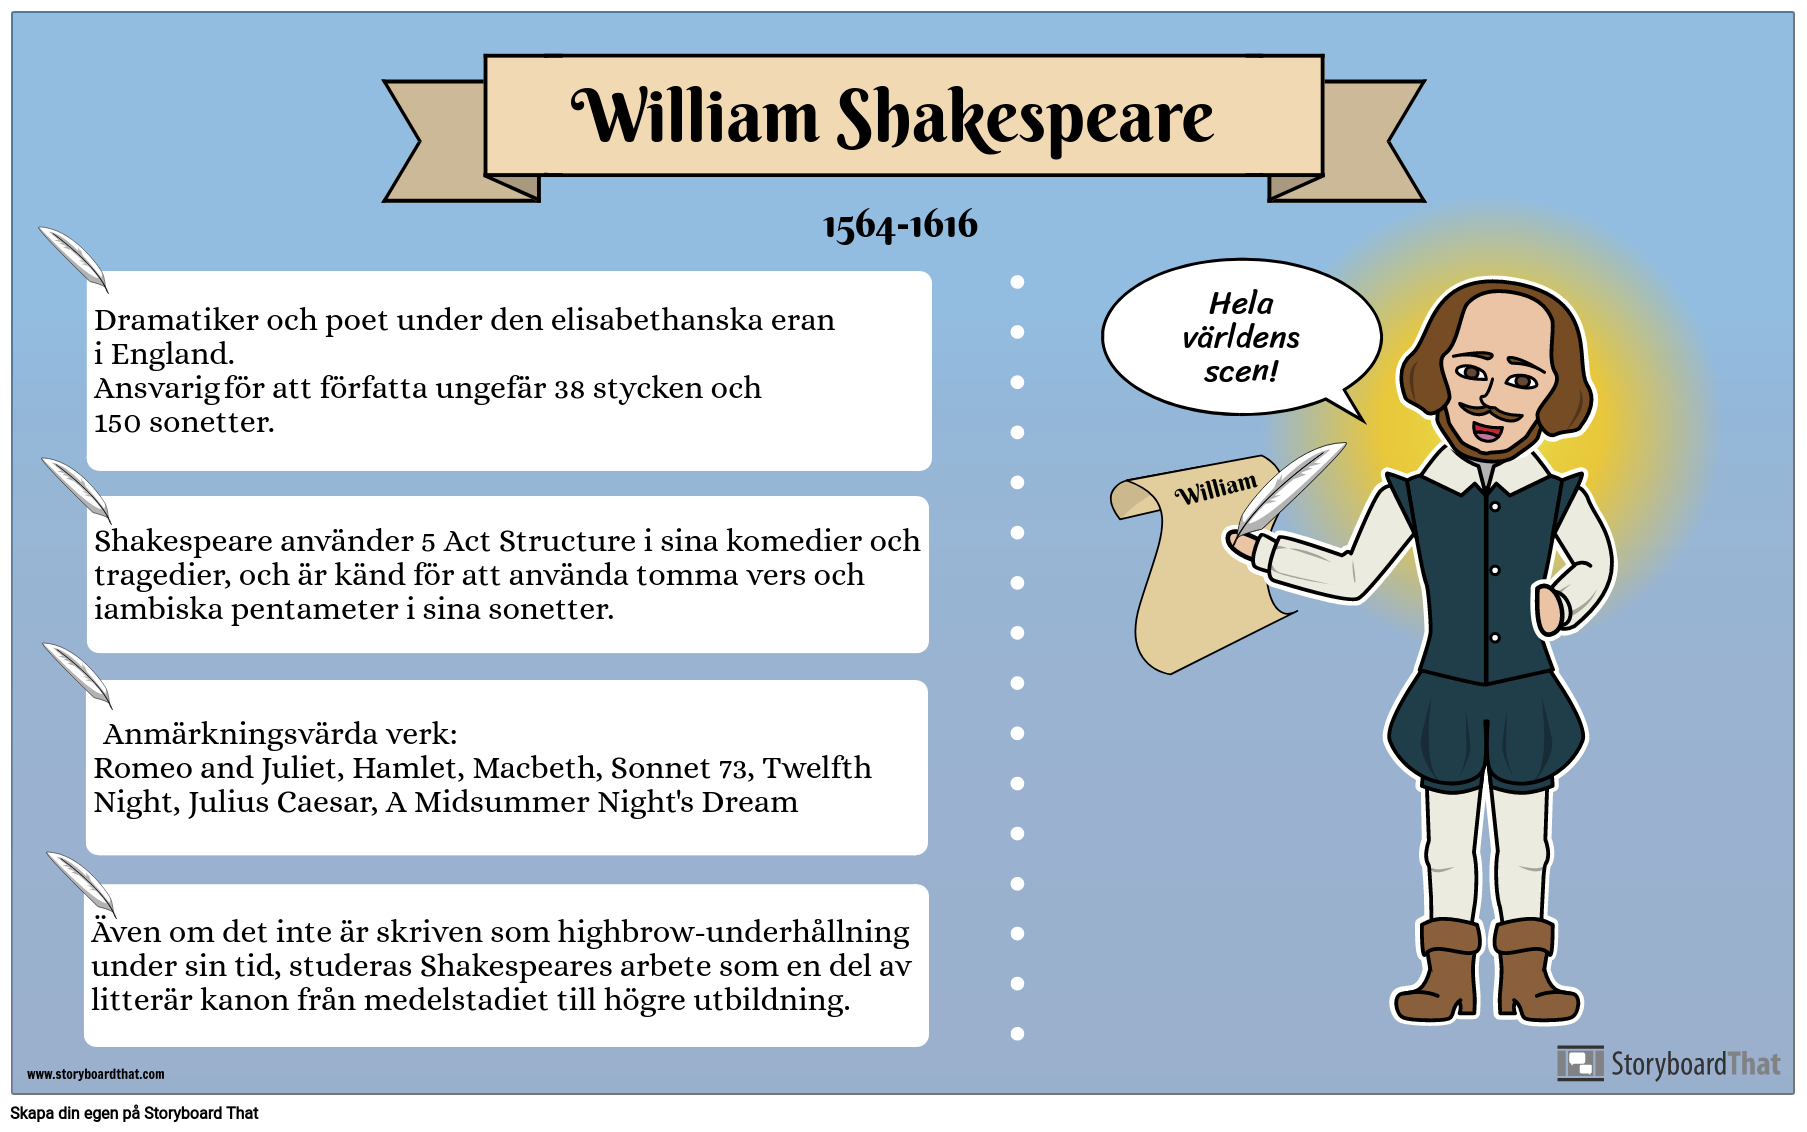 Biografiaffischexempel - William Shakespeare 